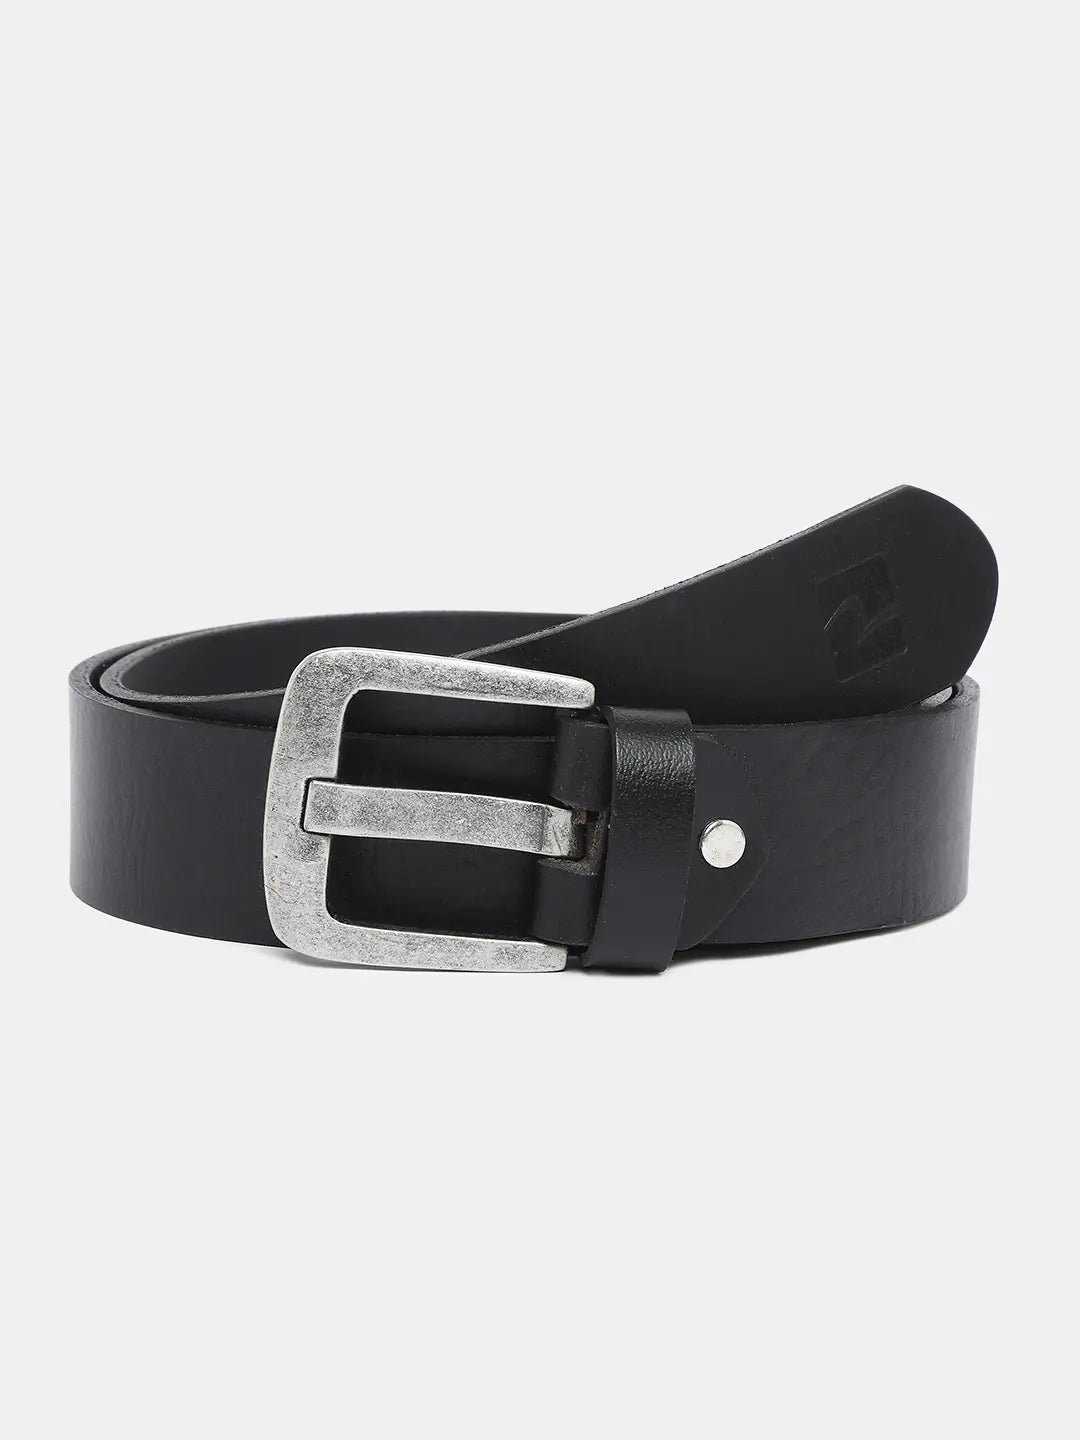 Spykar Black Leather Belt & Wallet Combo